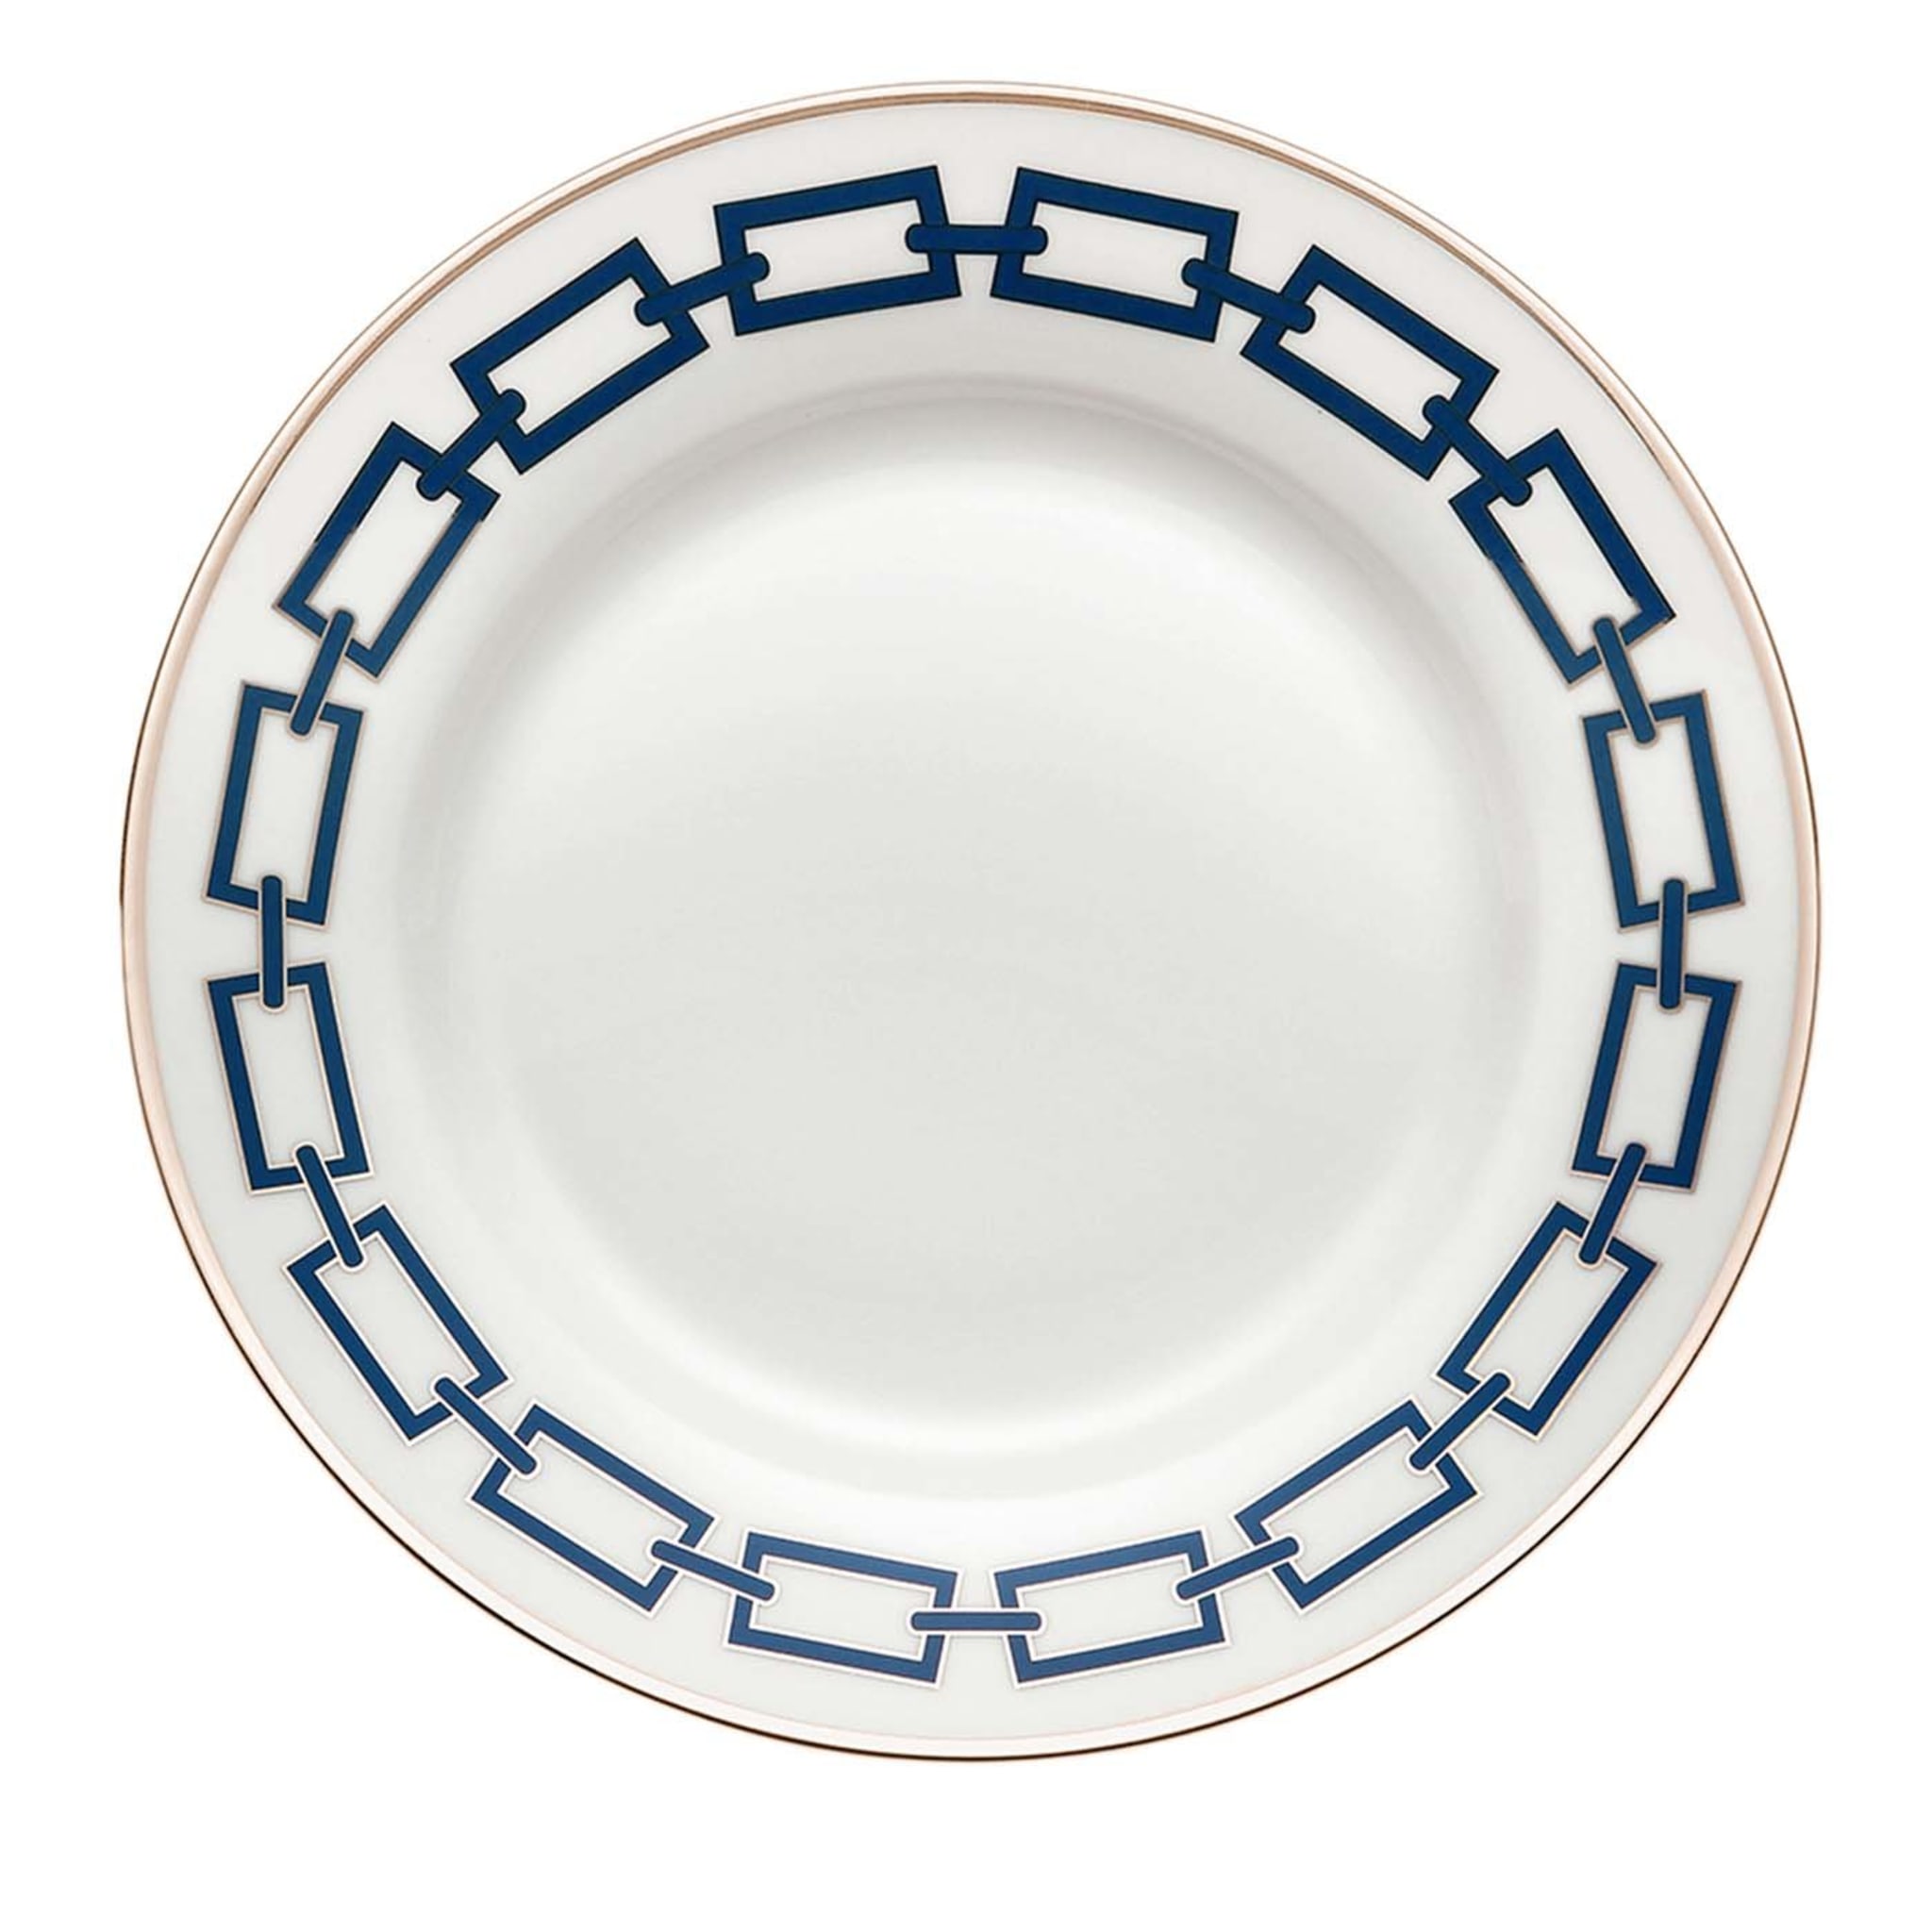 Catene Zaffiro Set of 6 Dinner Plates by Gio Ponti  - Main view